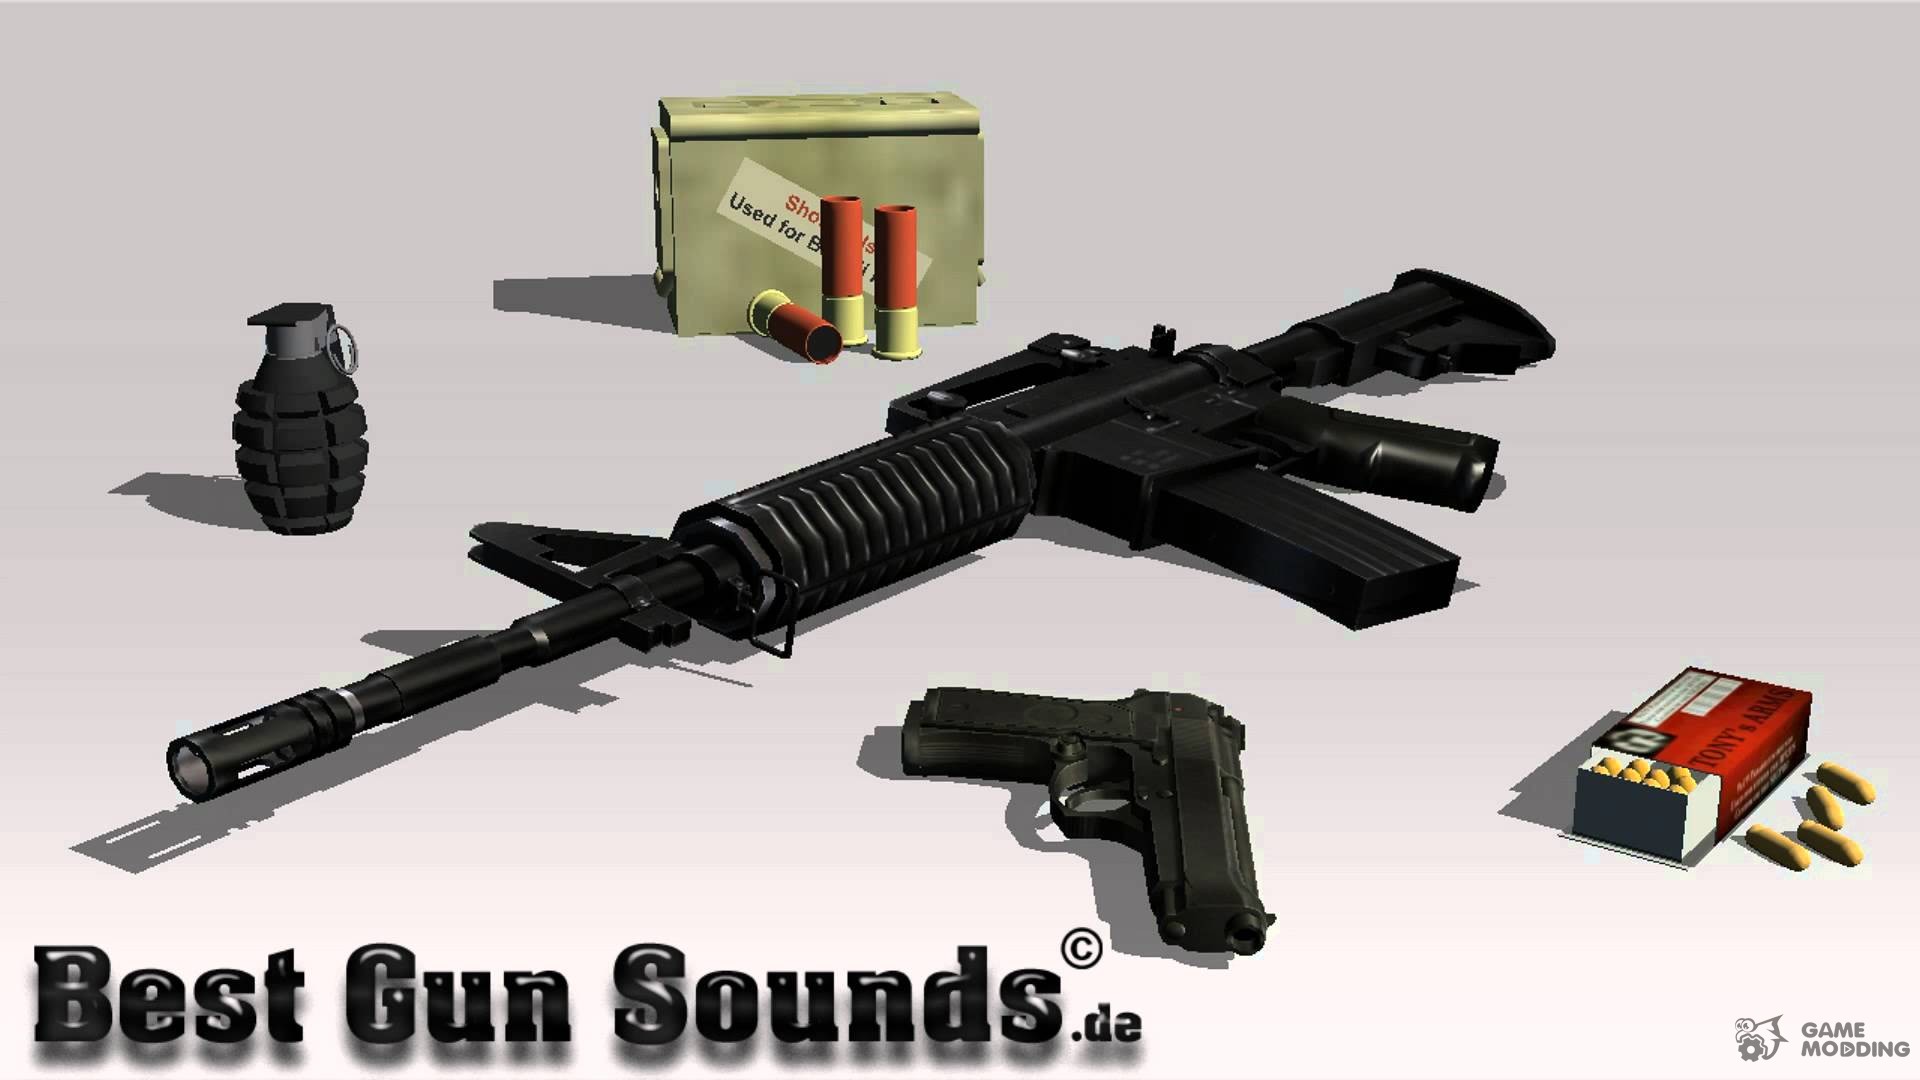 Realistic gun. Ган Бест. Sound Gun. Скрипт realistic Guns. Арта что за оружие.